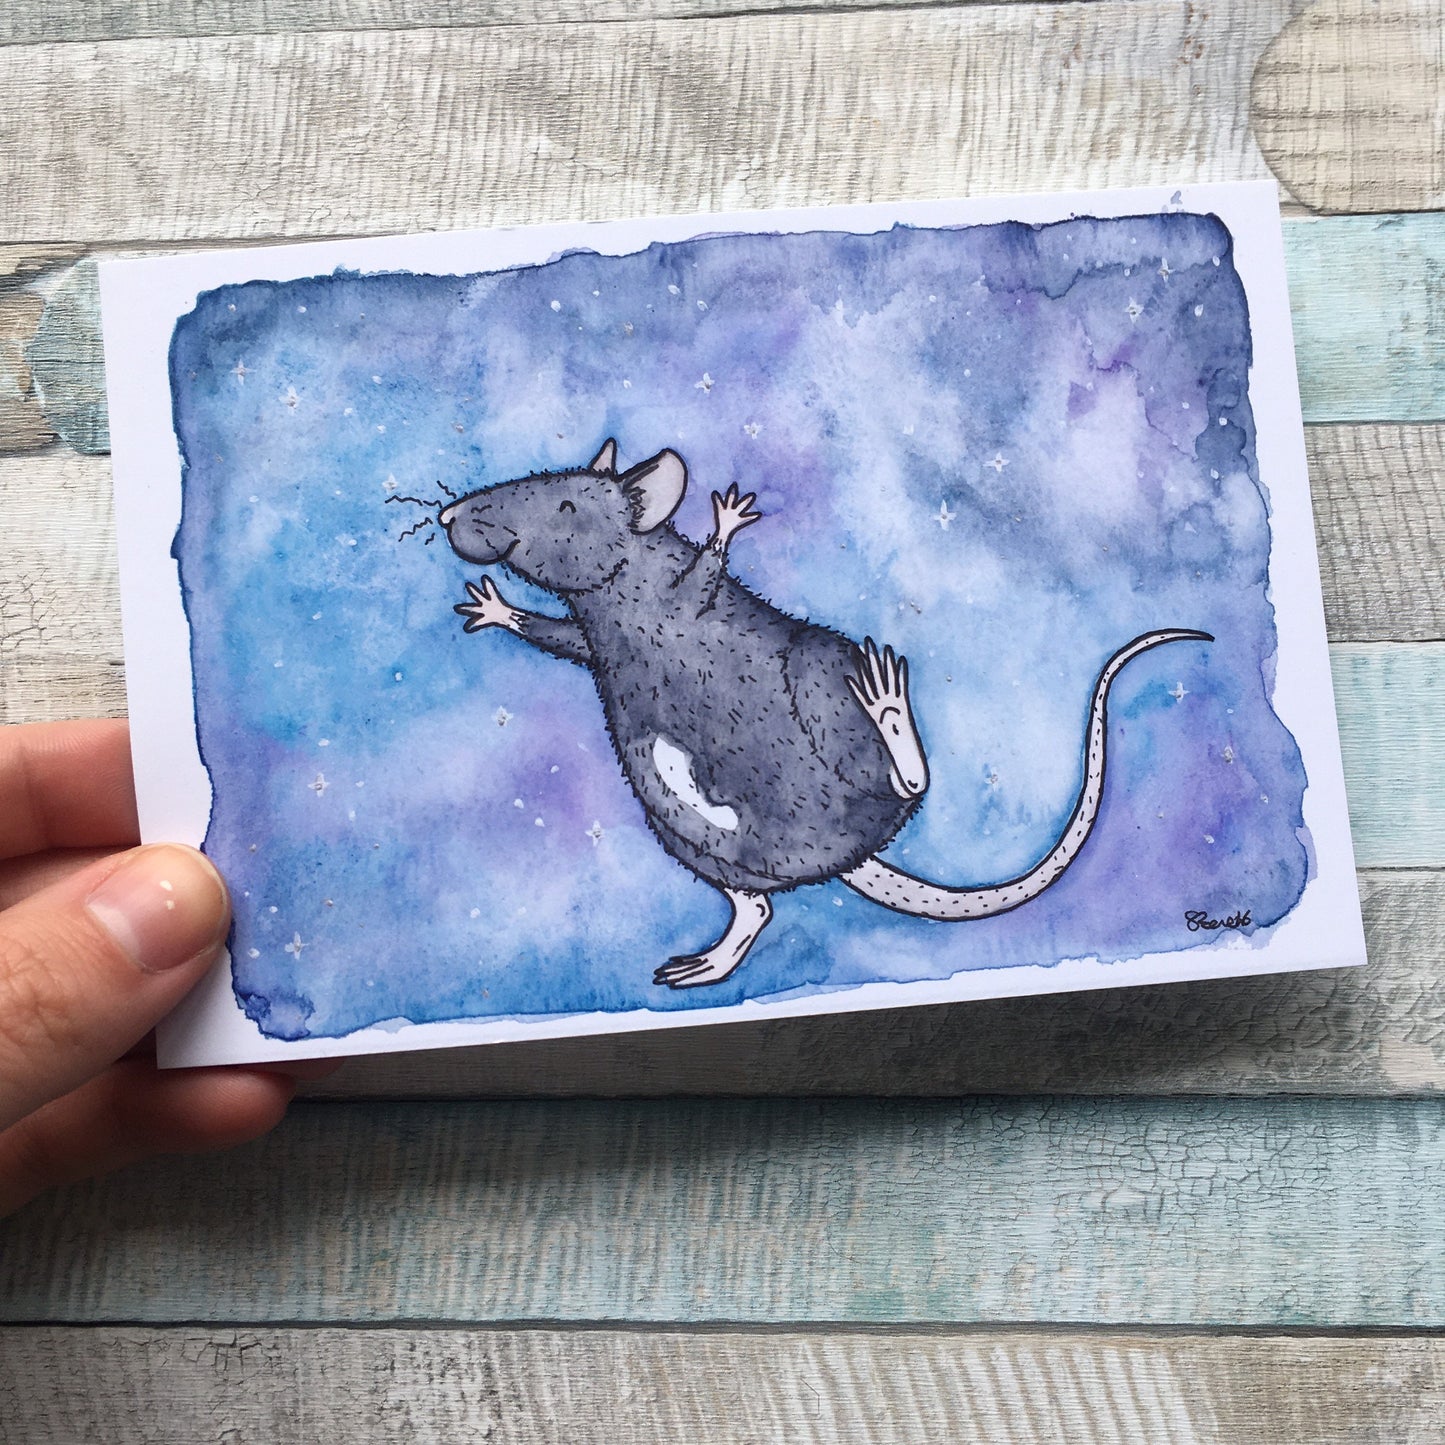 Astrid The Star Rat, Watercolour Painting, A5 6x4 Art Print, Cute Dancing Rat, Happy Pet Rat, Gift For Rat Lovers, Wall Art